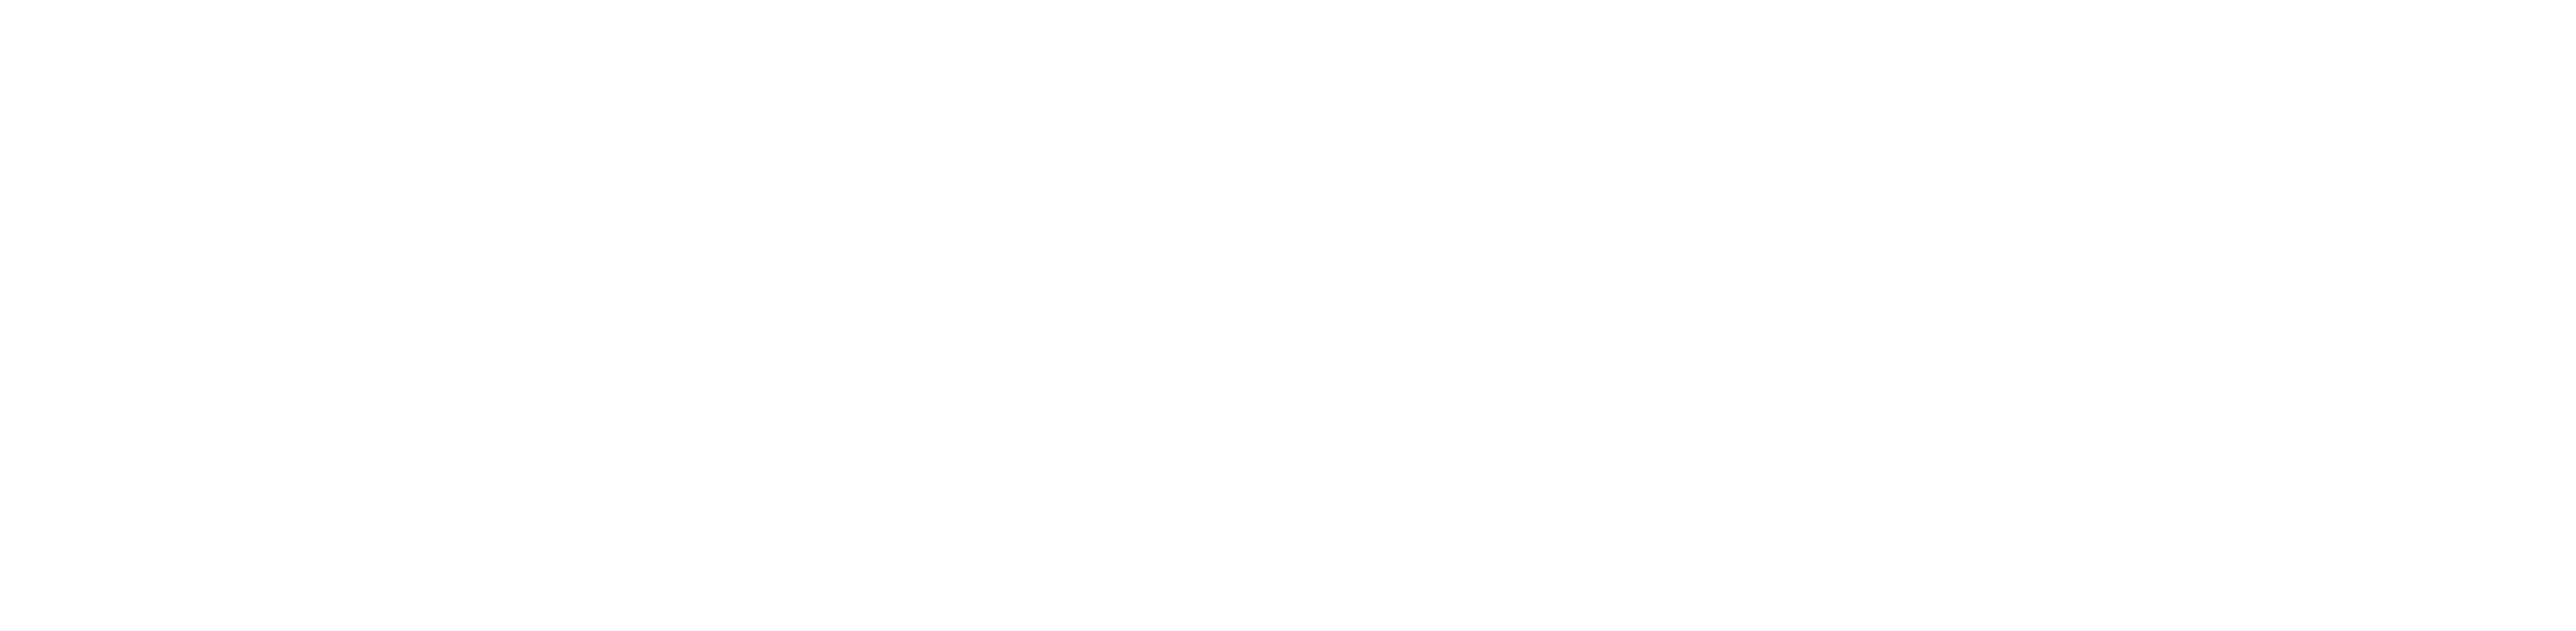 Members First logo